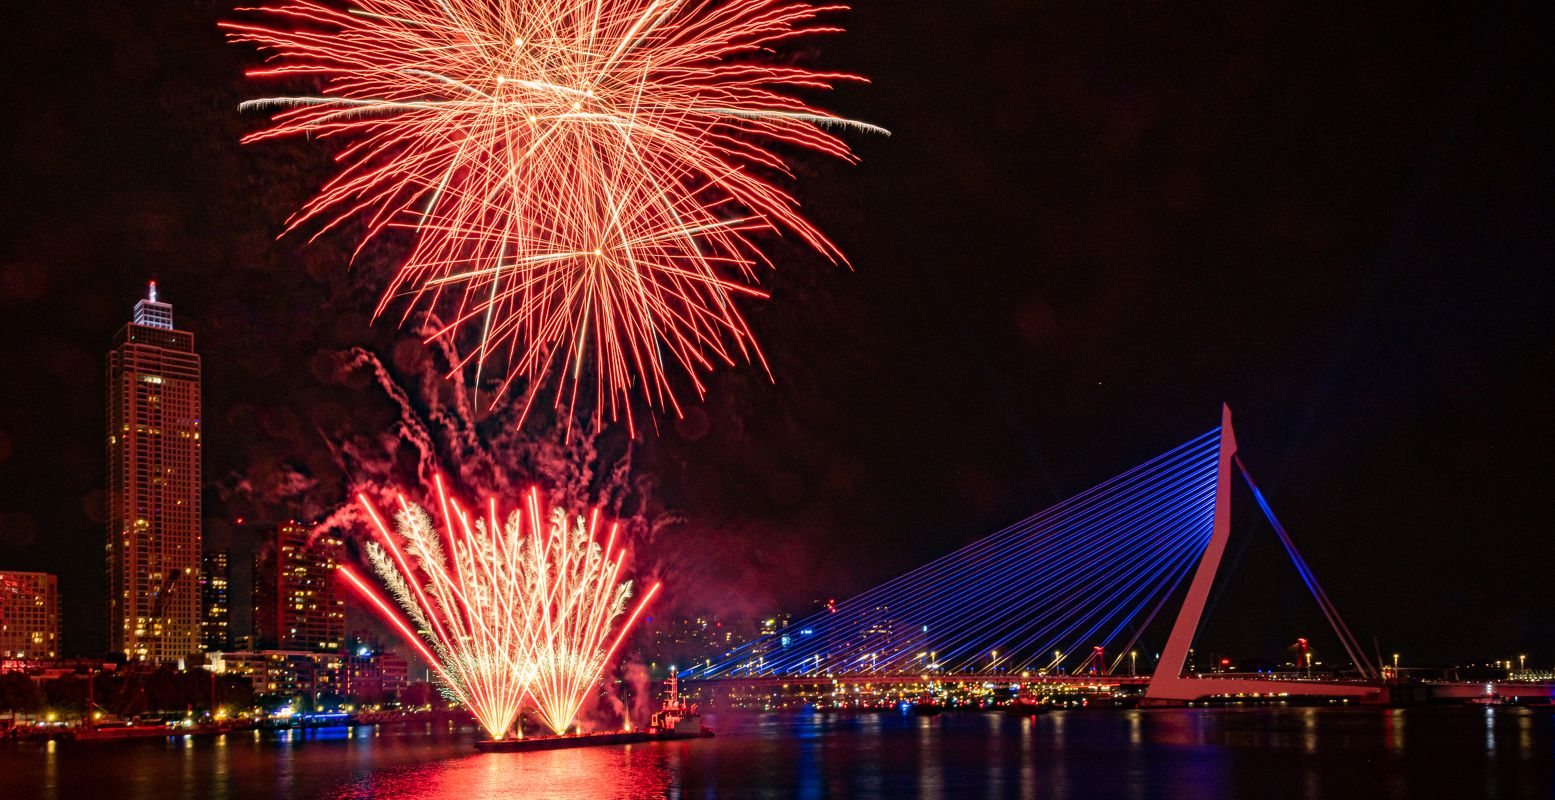 Vuurwerk boven de Erasmusbrug tijdens de Avondshow. Foto: Wereldhavendagen © Anne Reitsma